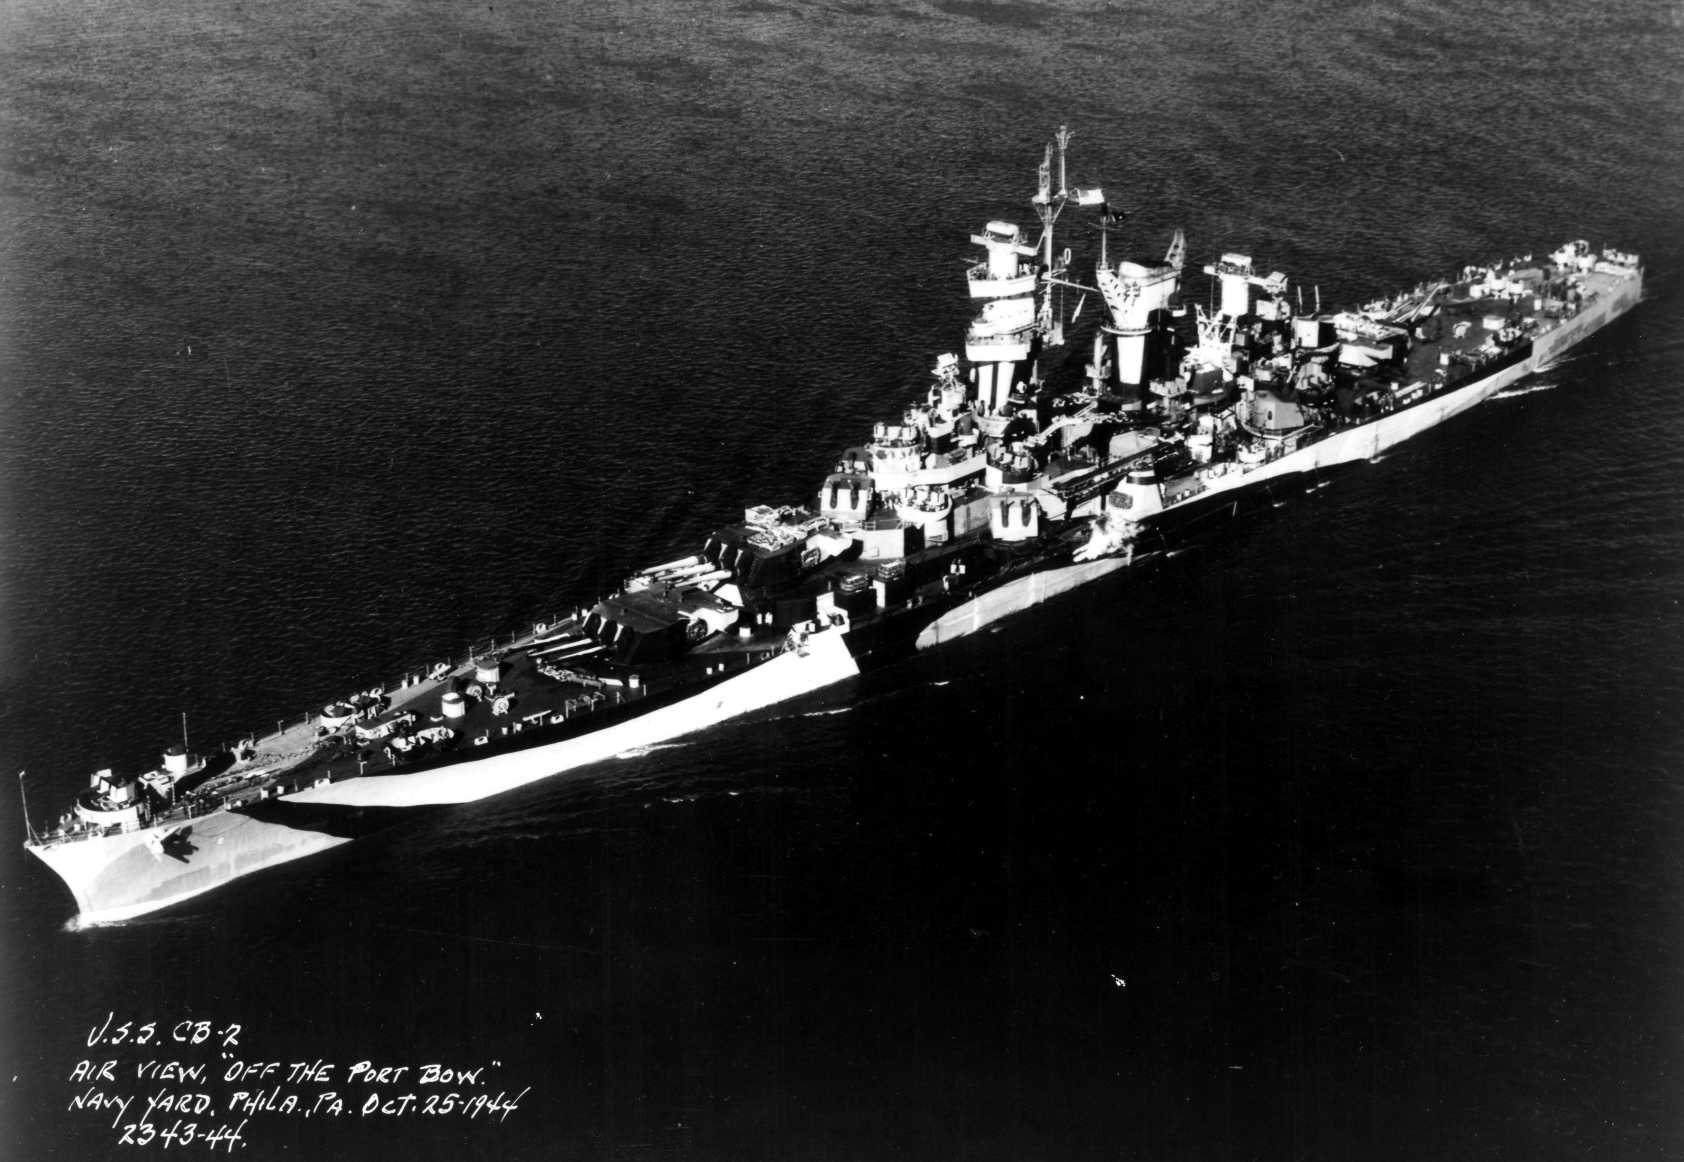 Aerial view of large cruiser Guam, Philadelphia Navy Yard, Pennsylvania, United States, 25 Oct 1944, photo 2 of 5